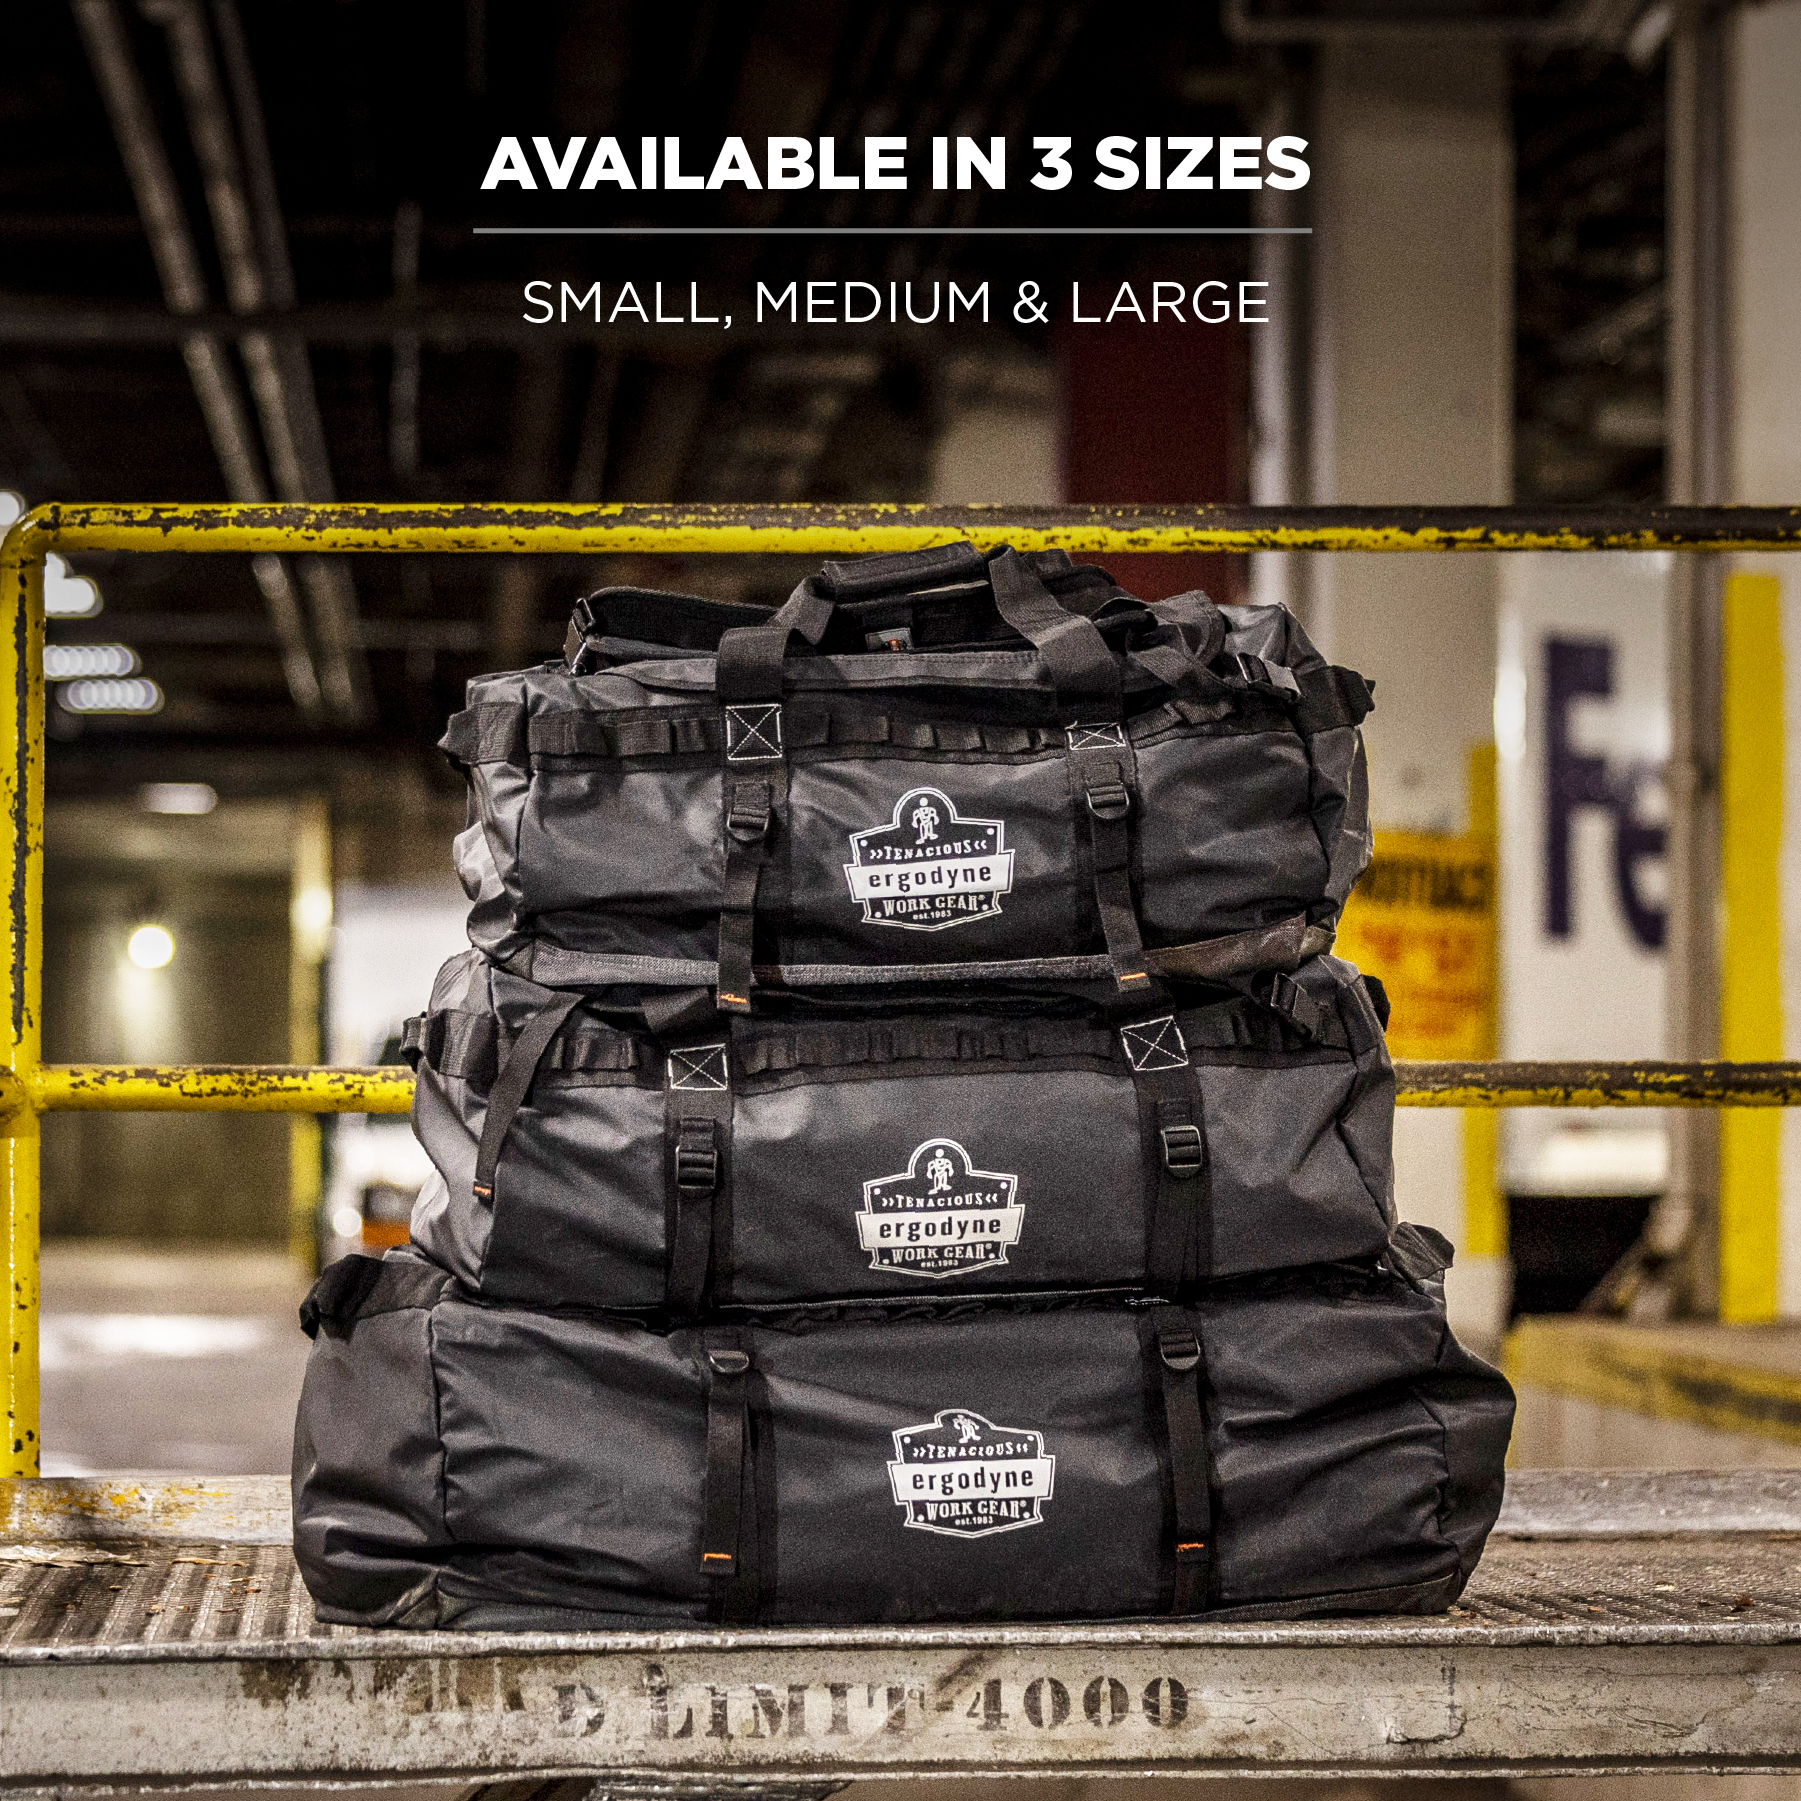 UA Undeniable 5.0 Medium Duffle Bag | Under Armour